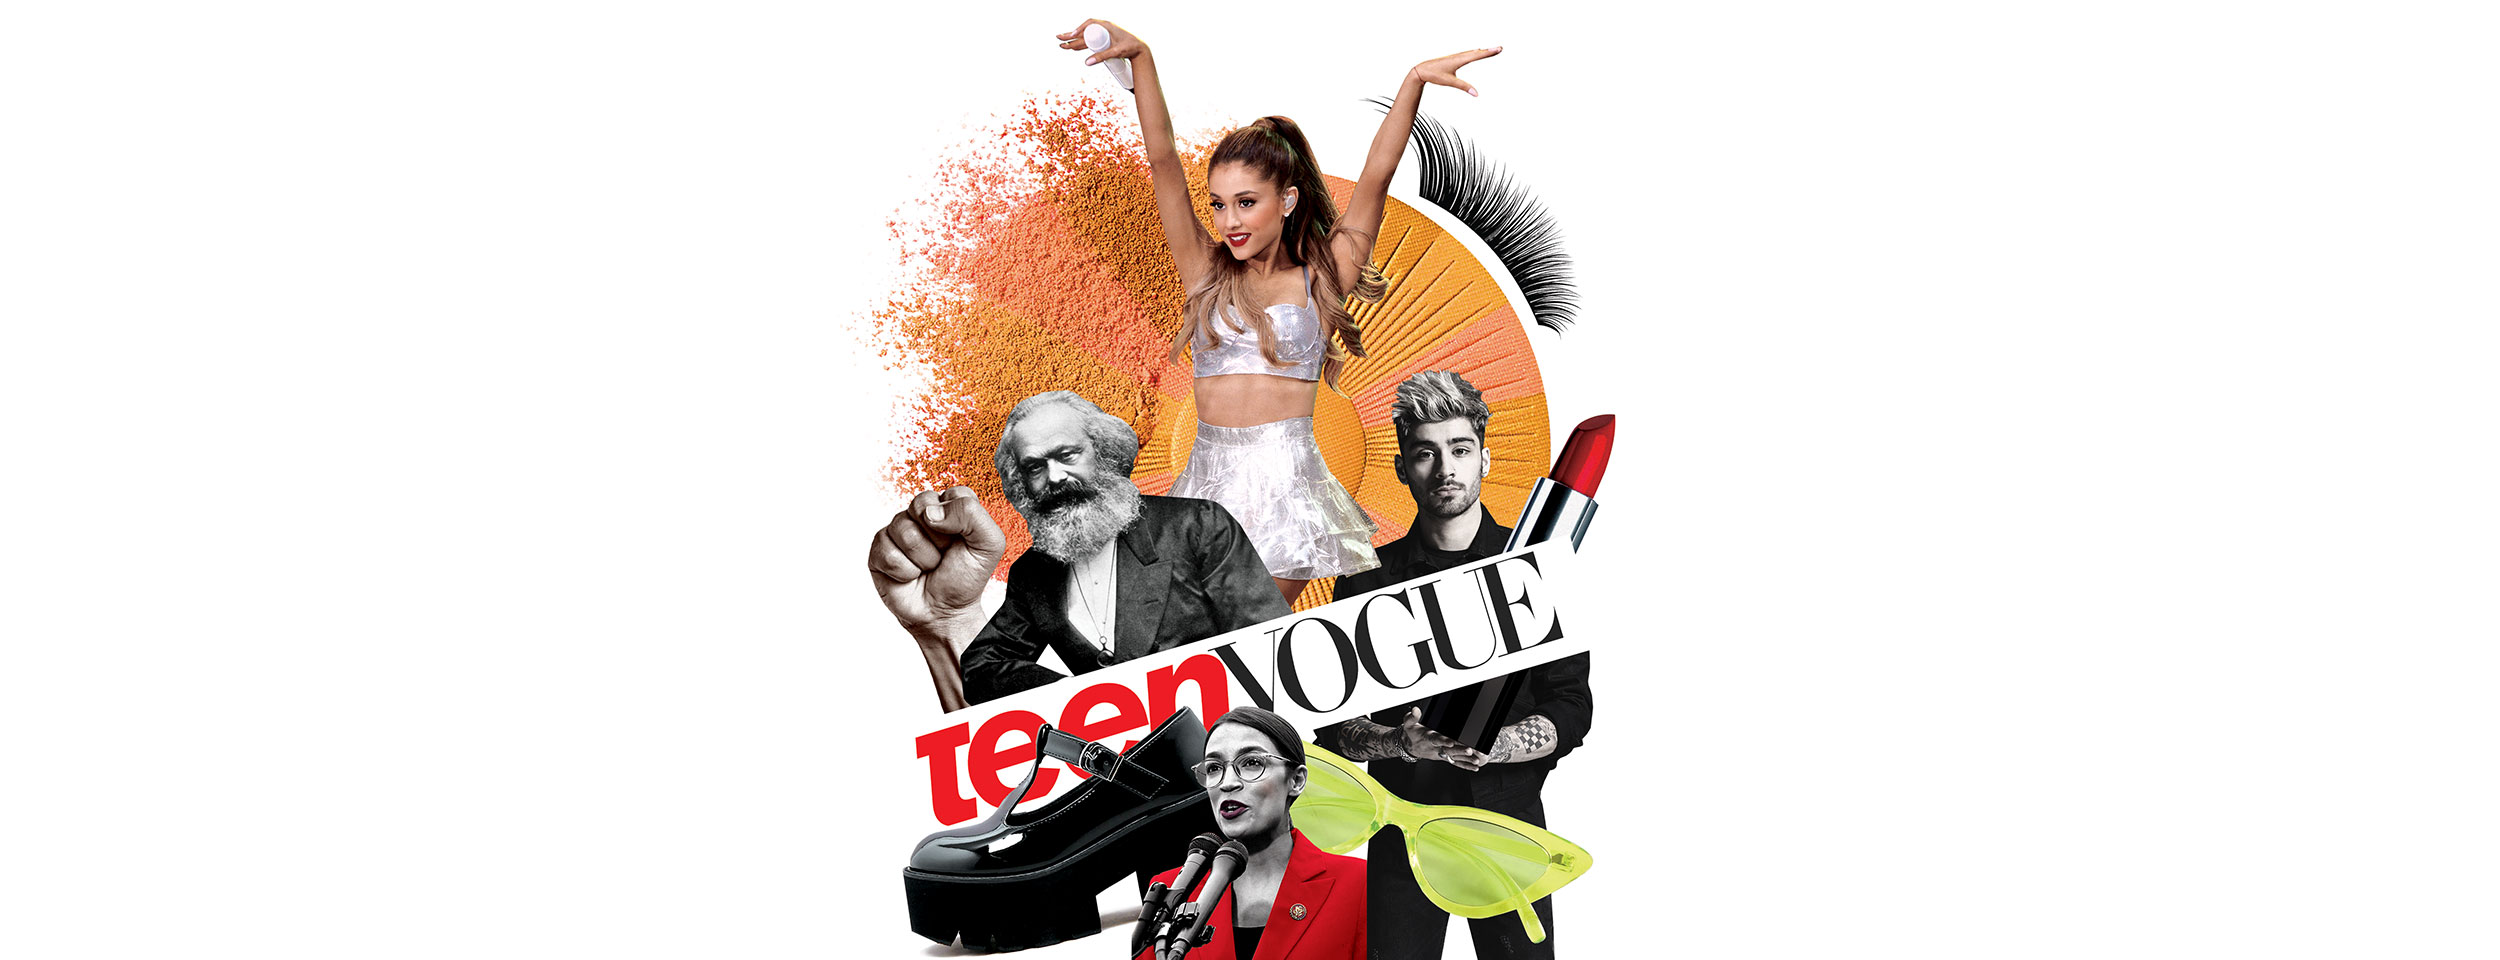 Vogue (D) August 2016 (Digital) 